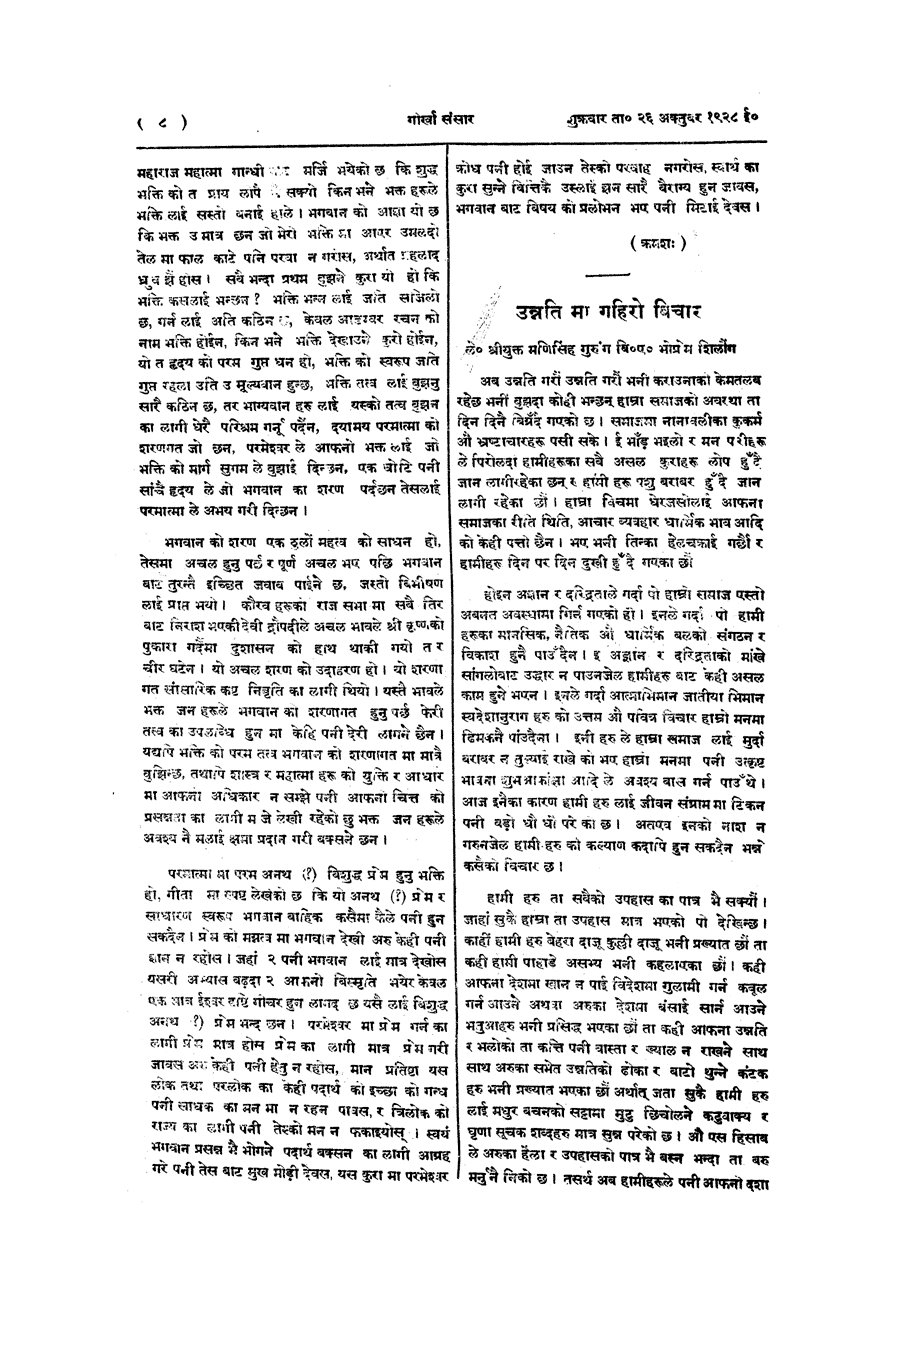 Gorkha Sansar, 26 Oct 1928, page 8